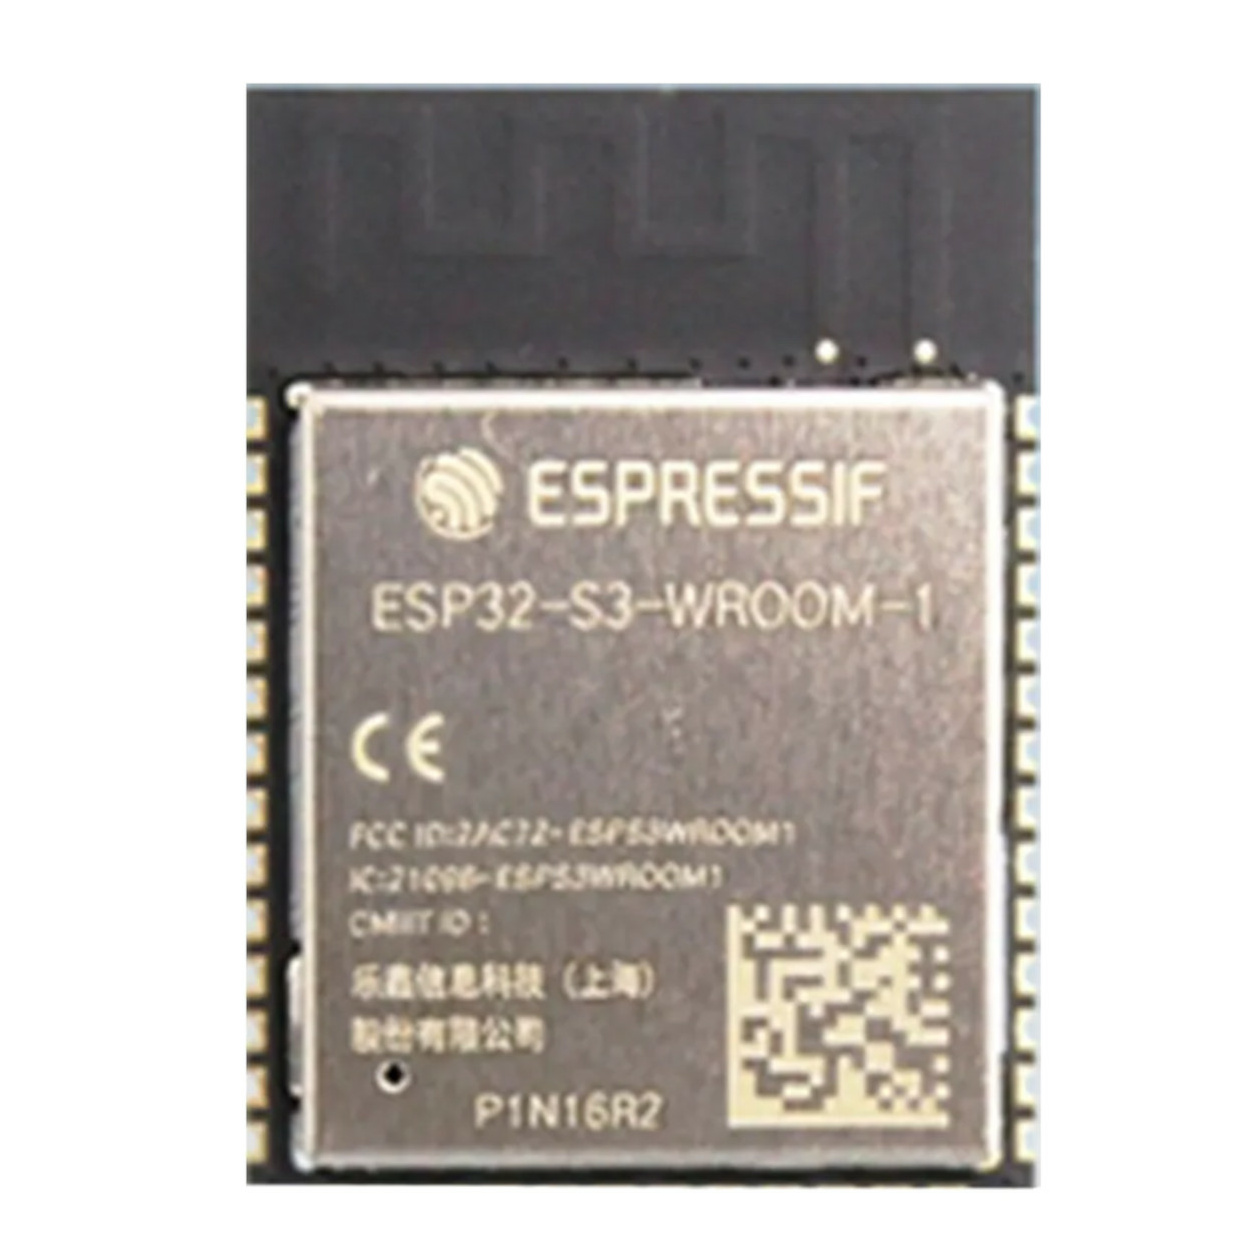 ESP32-S3-WROOM-1-N8 Espressif Systems | Mouser